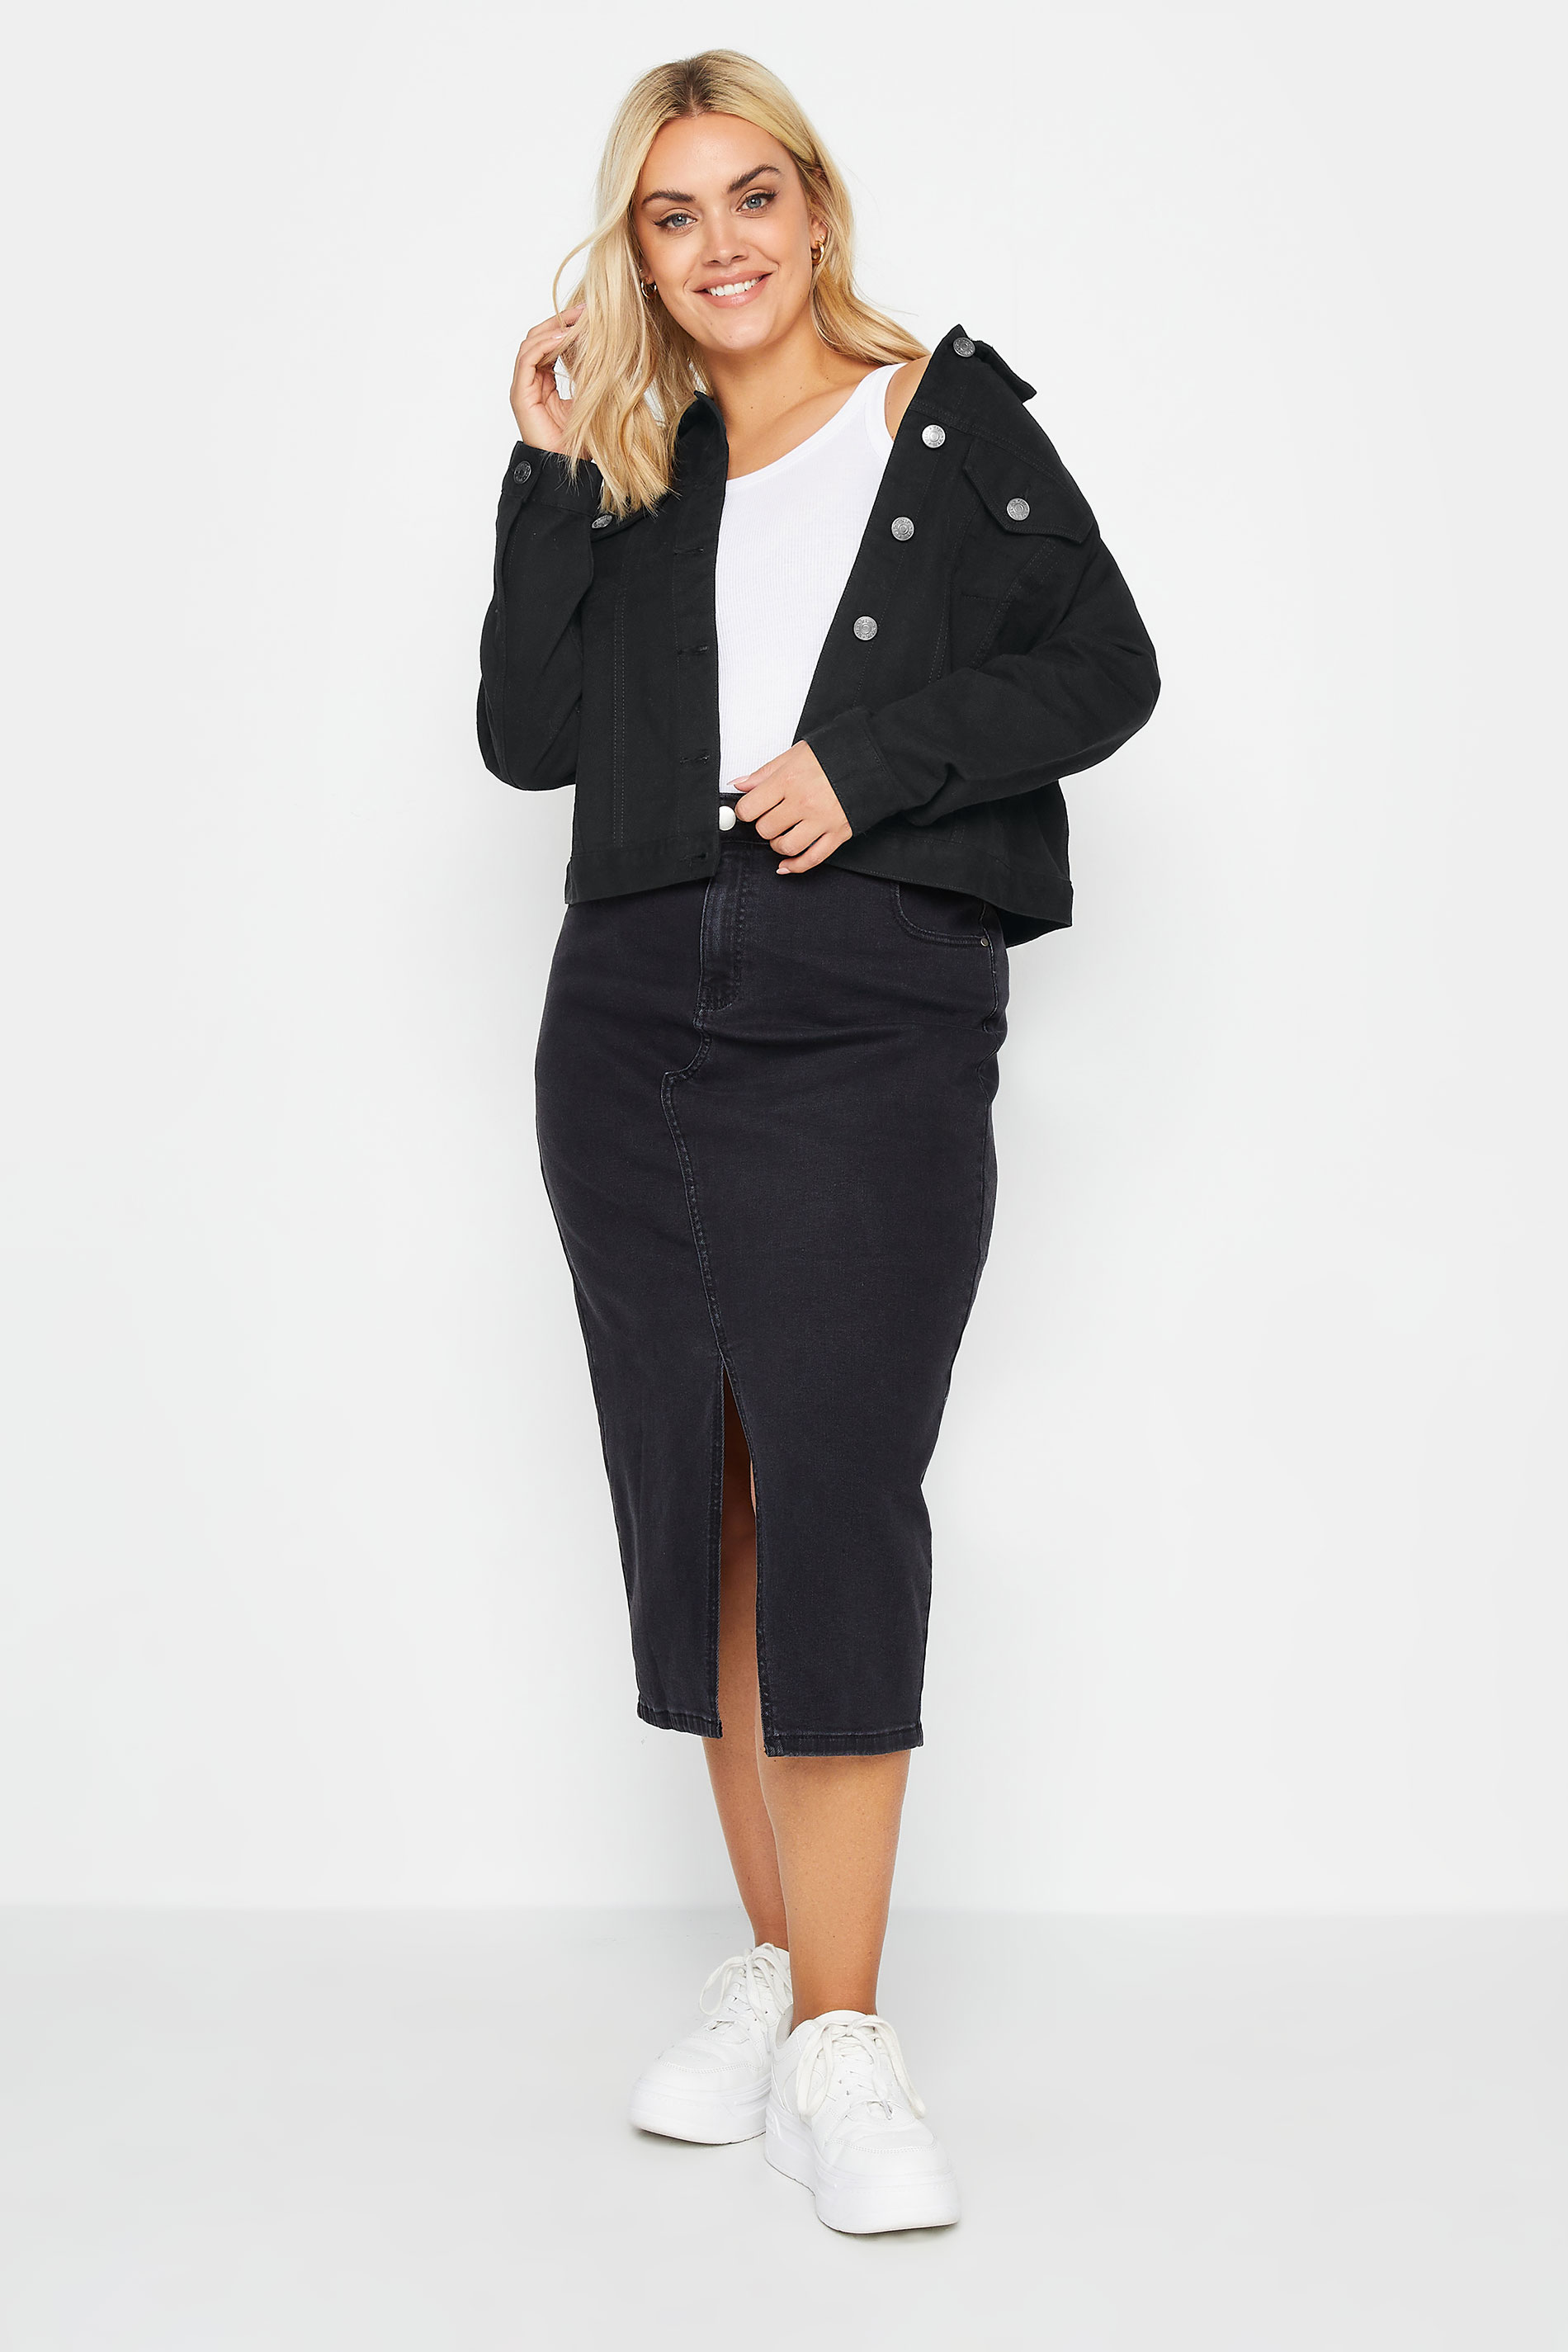 YOURS Plus Size Curve Black Denim Jacket | Yours Clothing 2